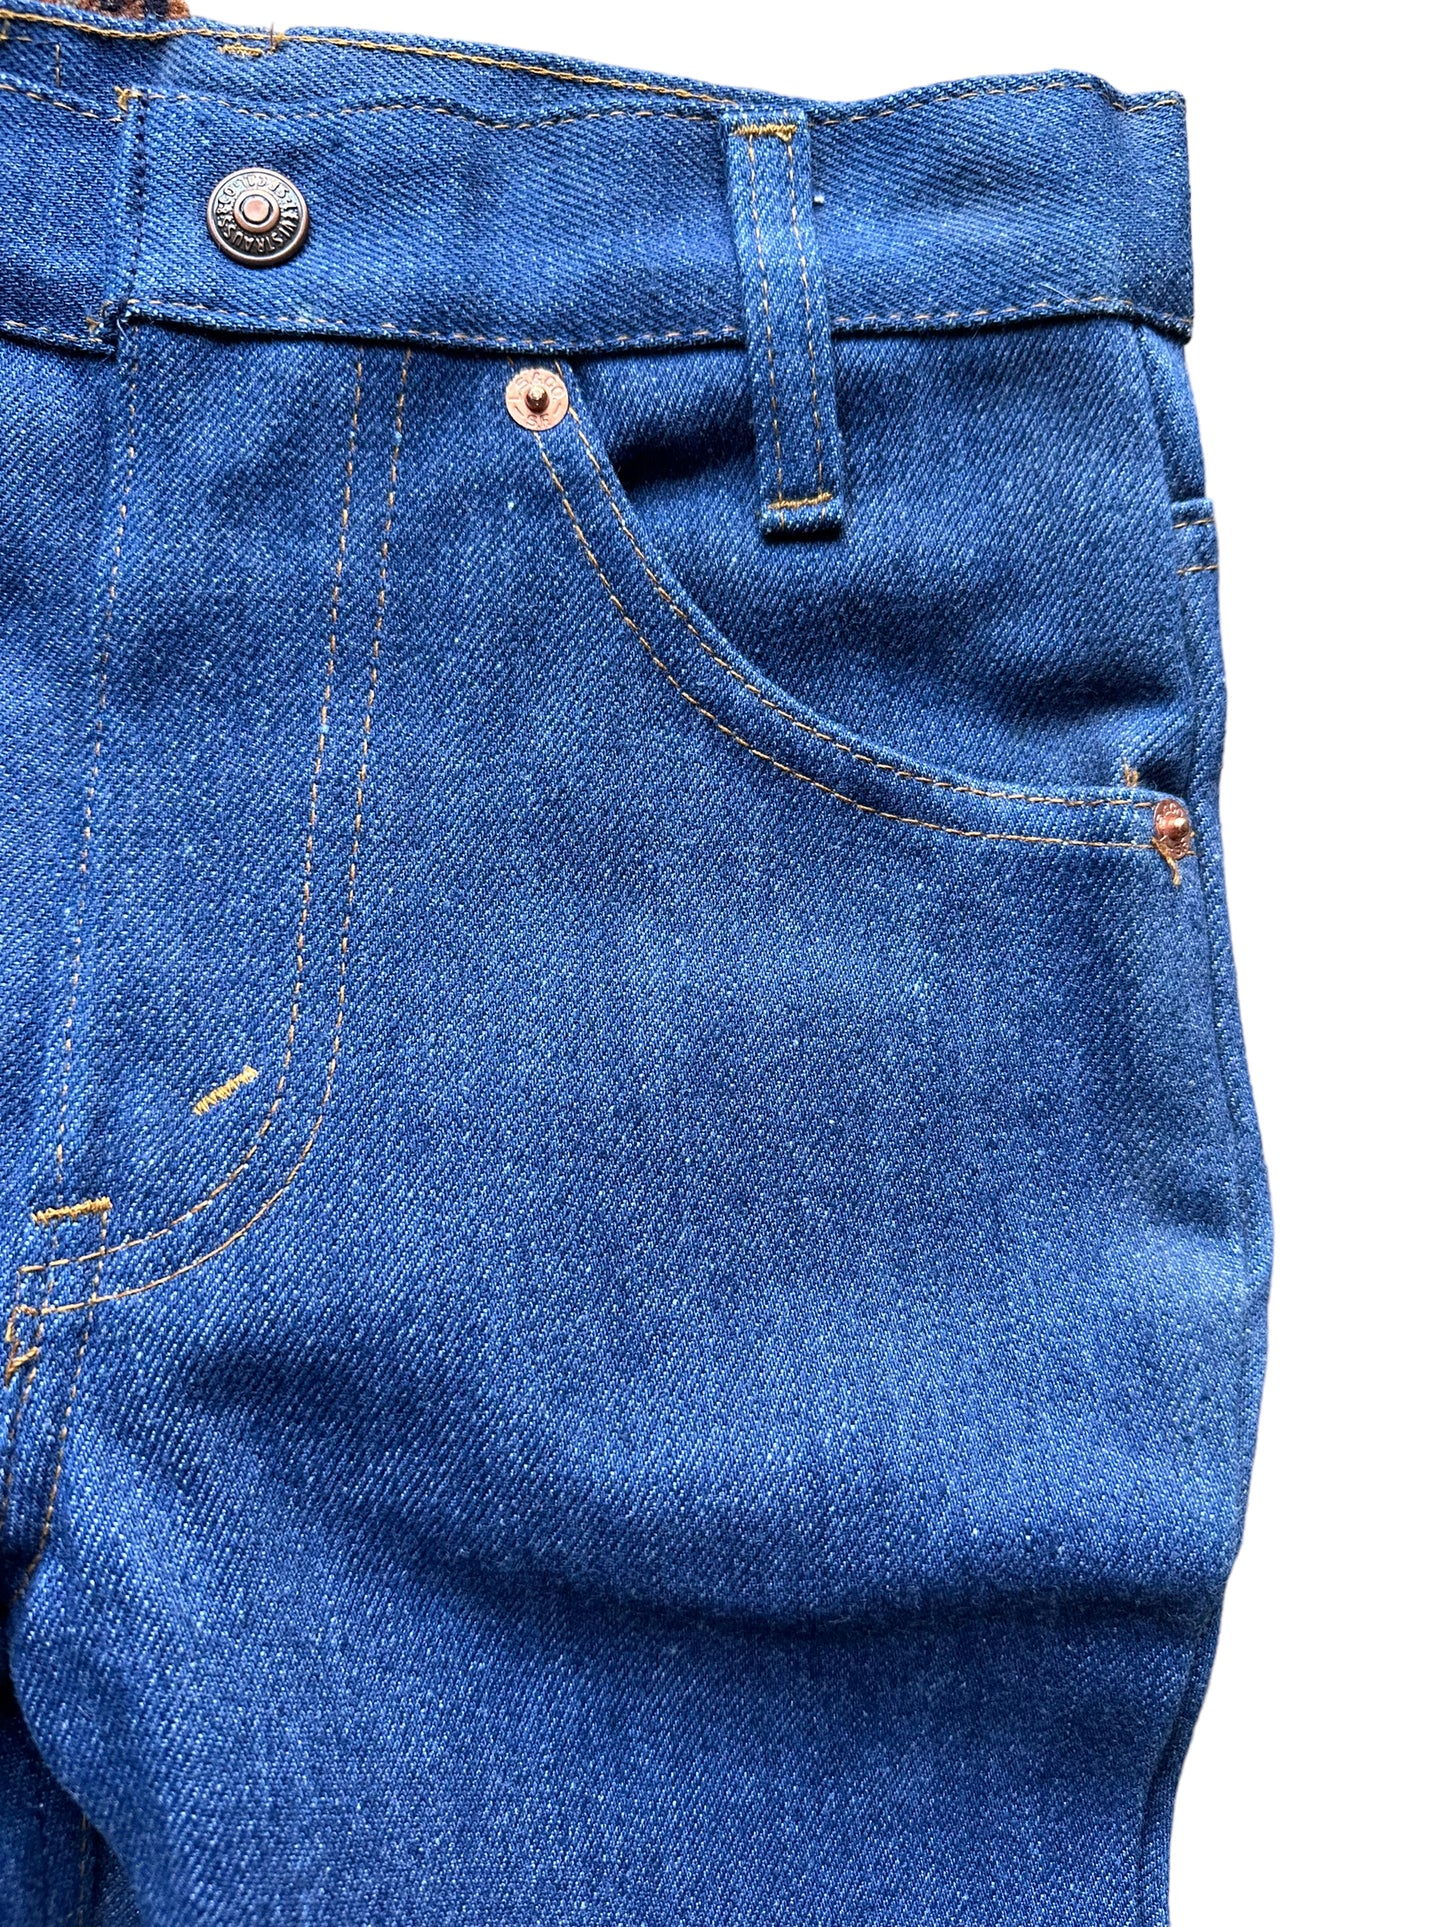 Front left pocket view of Vintage Deadstock Saddleman Boot Cut Jeans 24x23 | Seattle Kid's Vintage | Barn Owl Deadstock Levi's